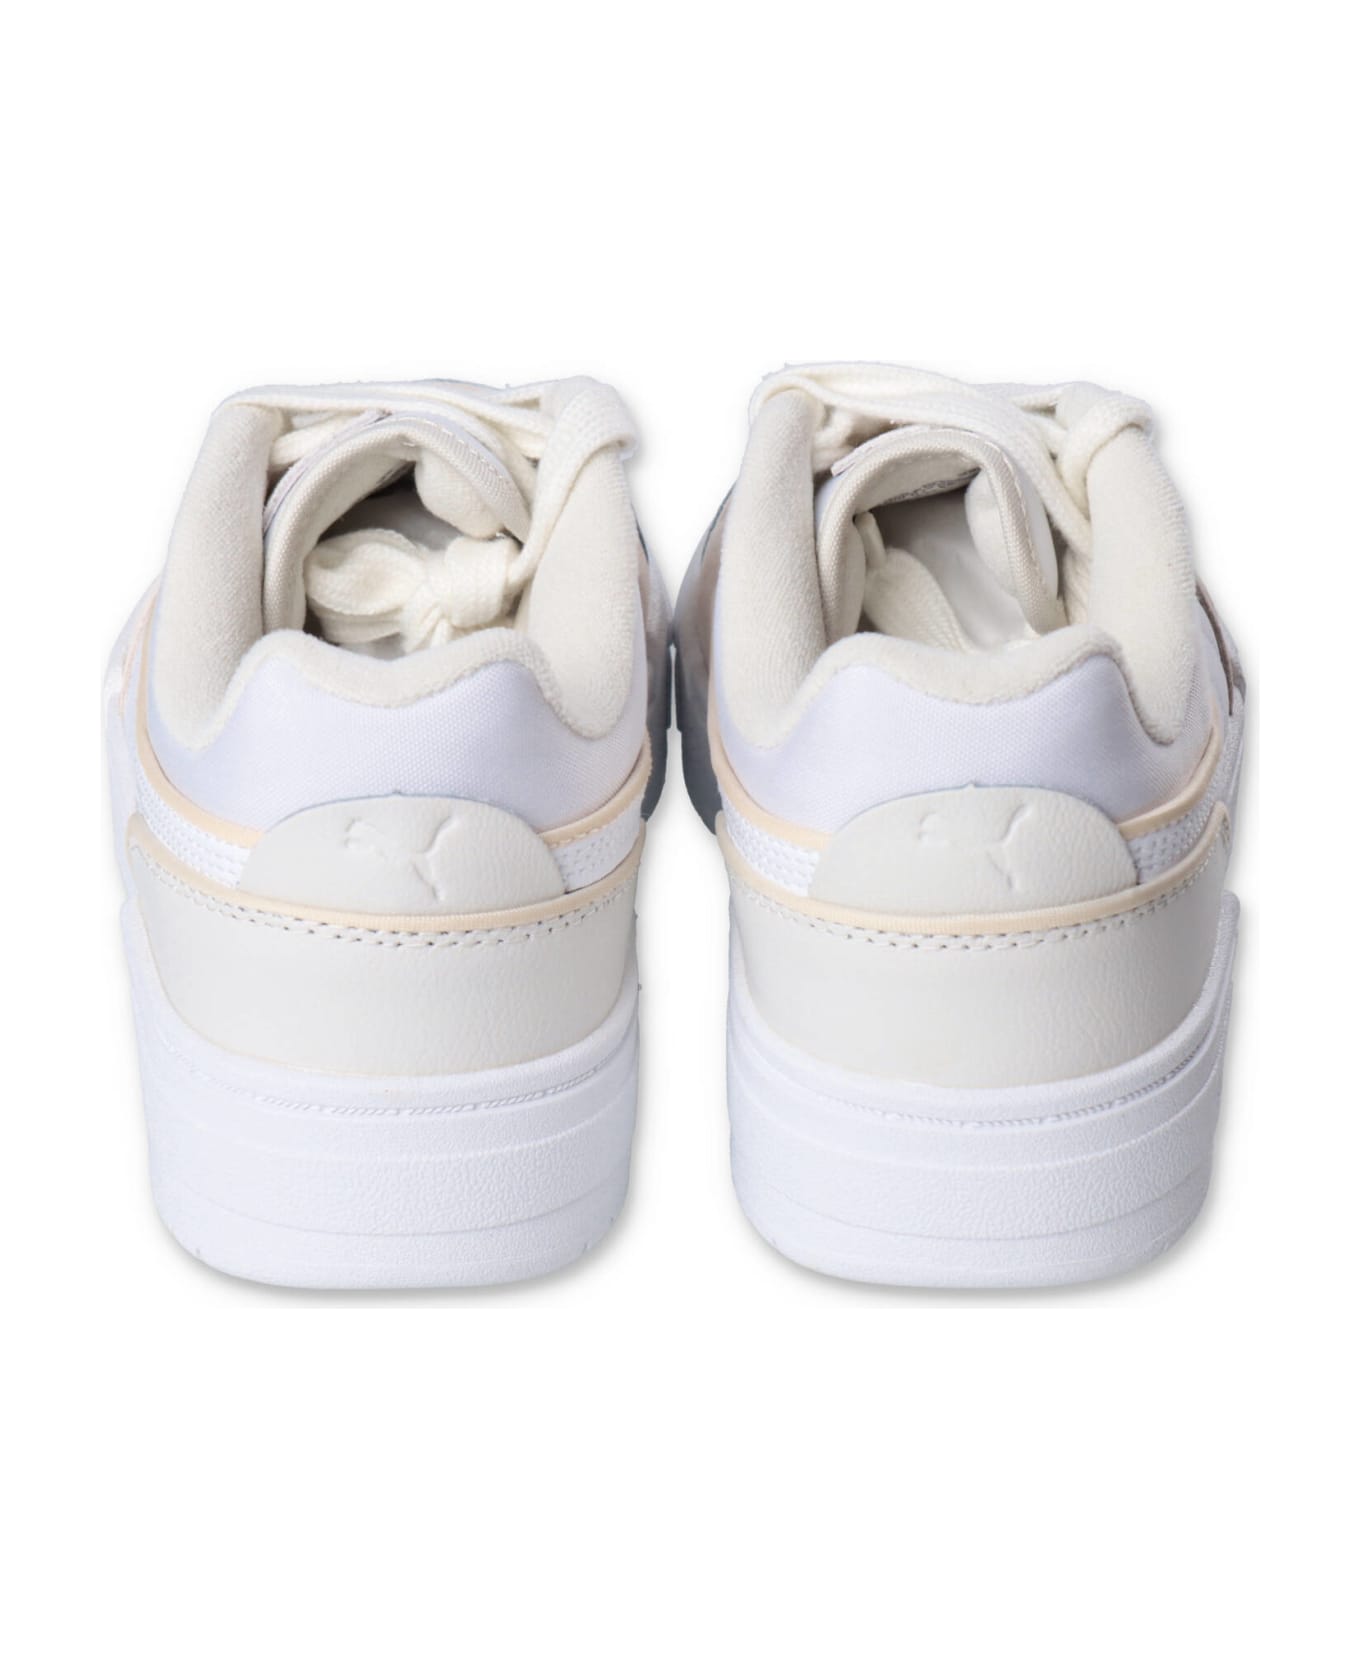 Puma Sneakers Bianche In Pelle Bambina - Bianco